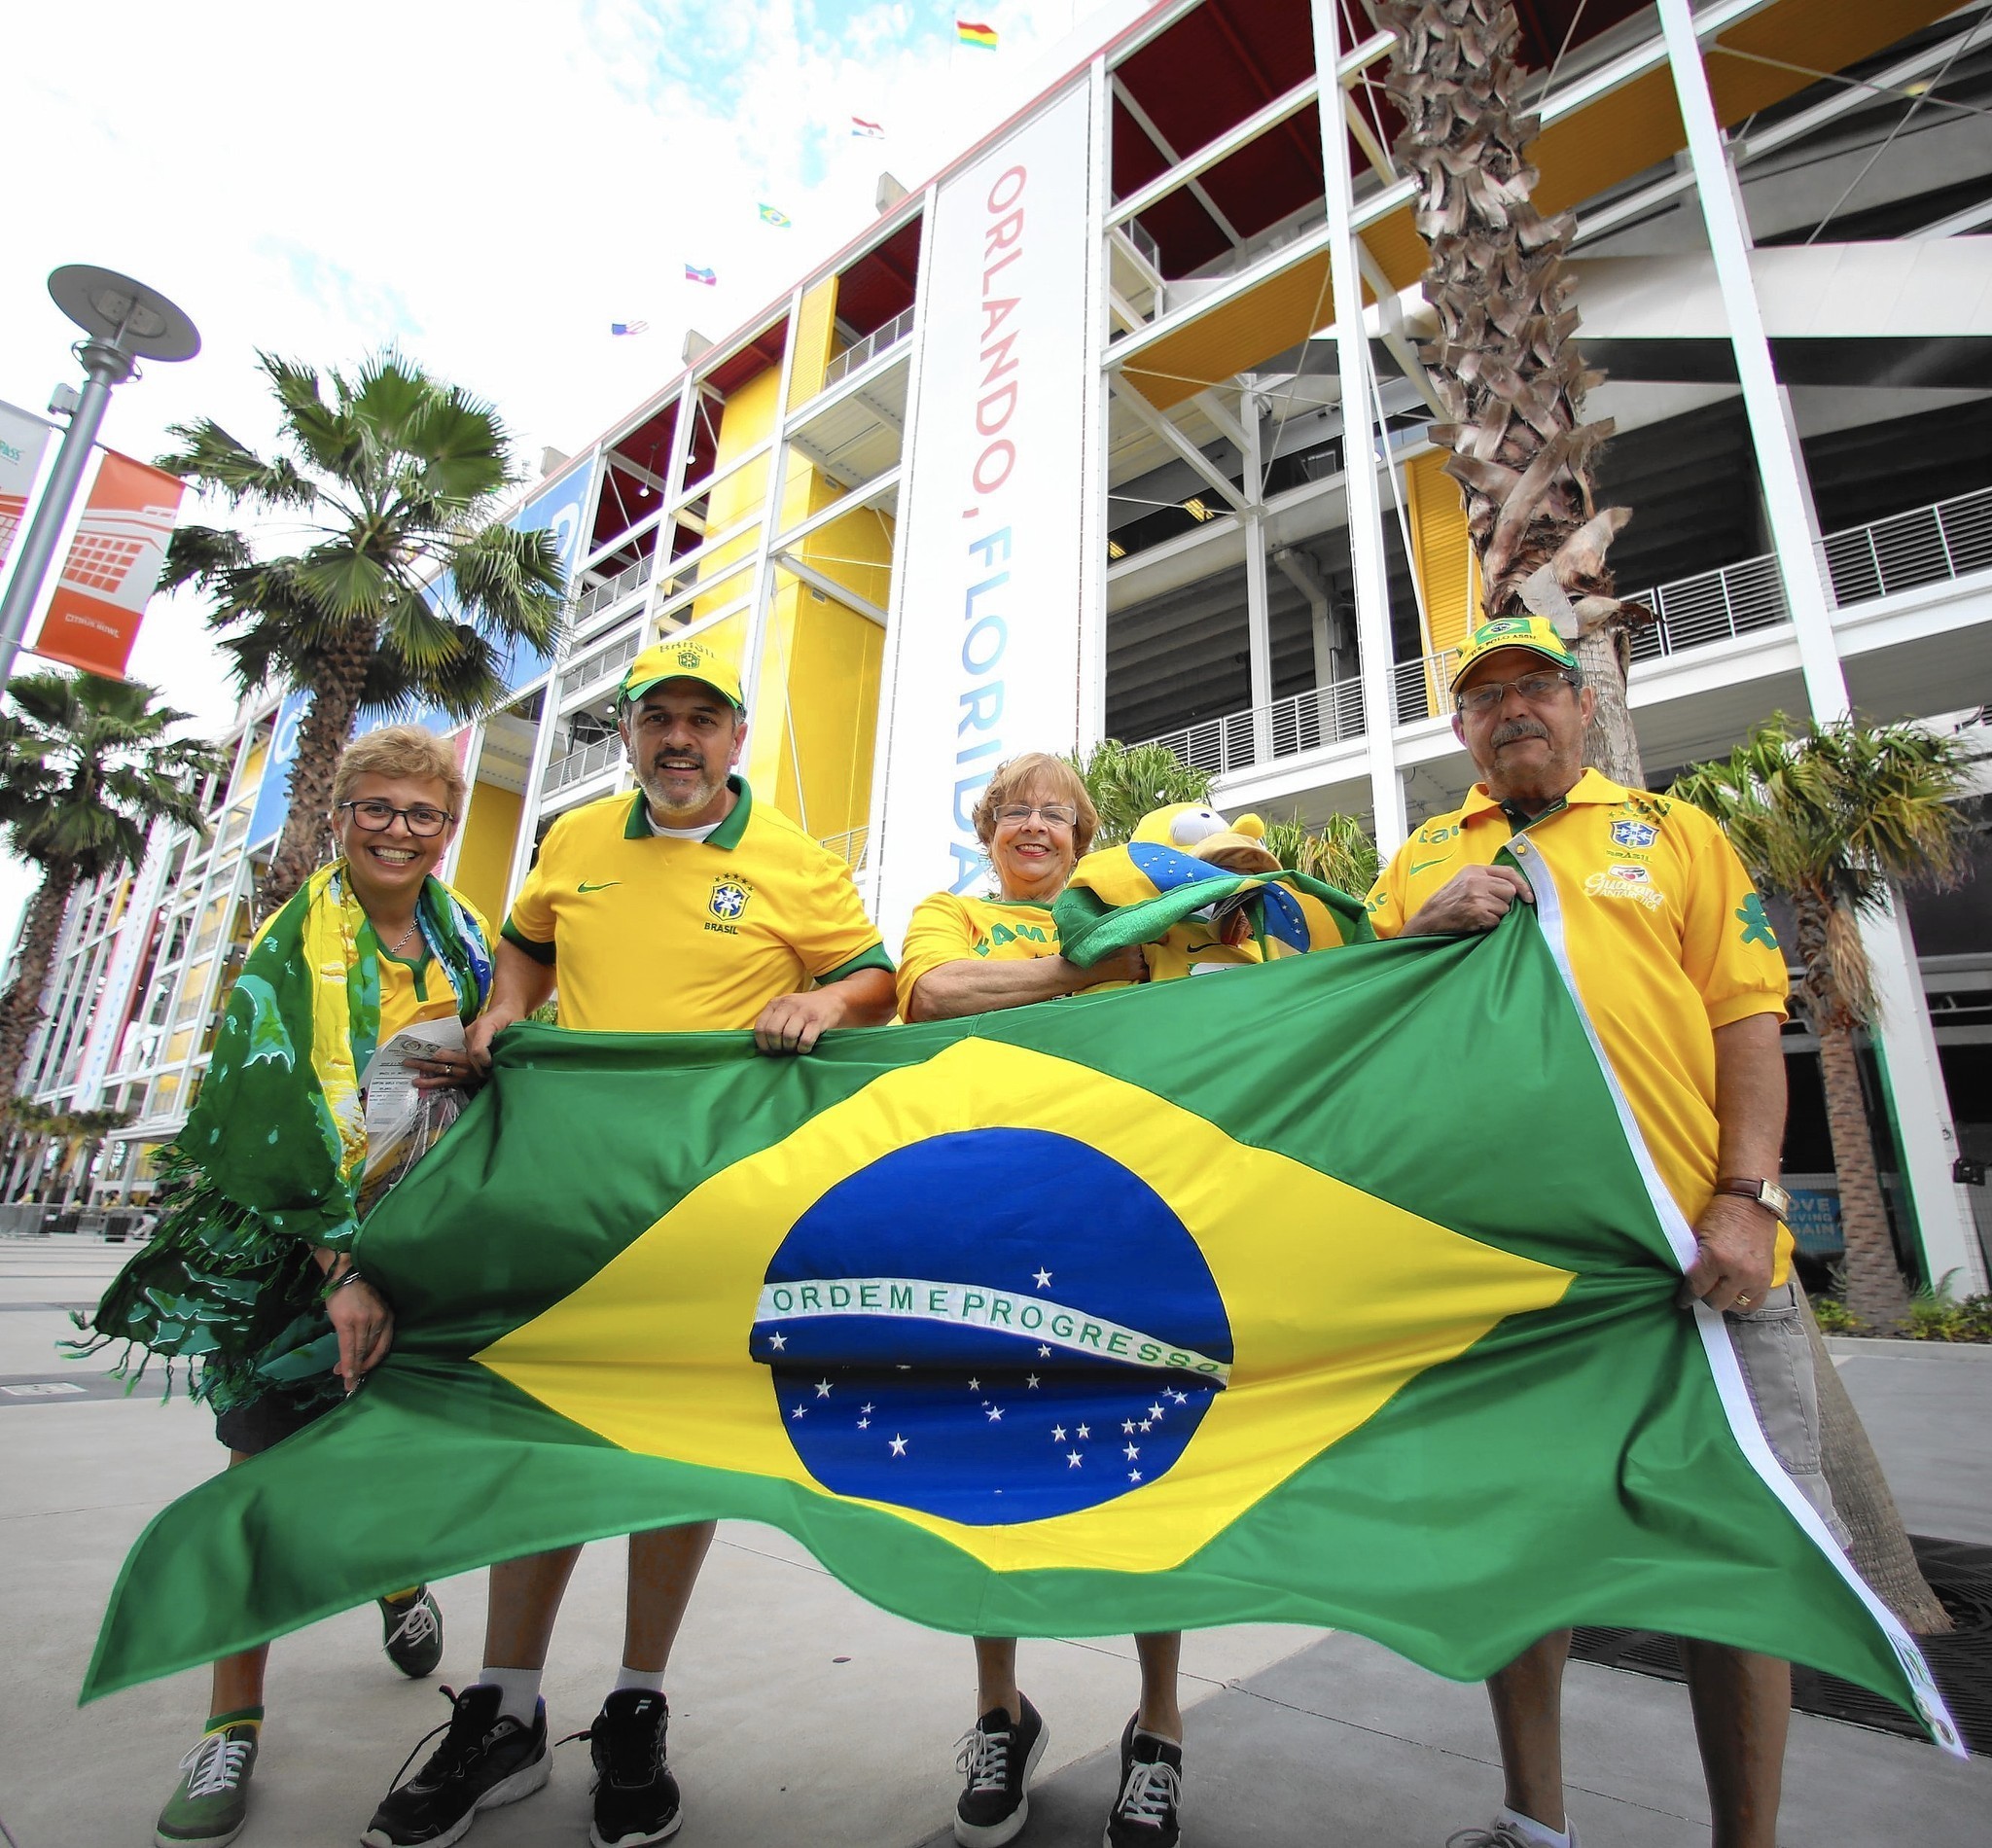 Brazil soccer team routs Haiti, makes American sports seem minor league - Orlando Sentinel